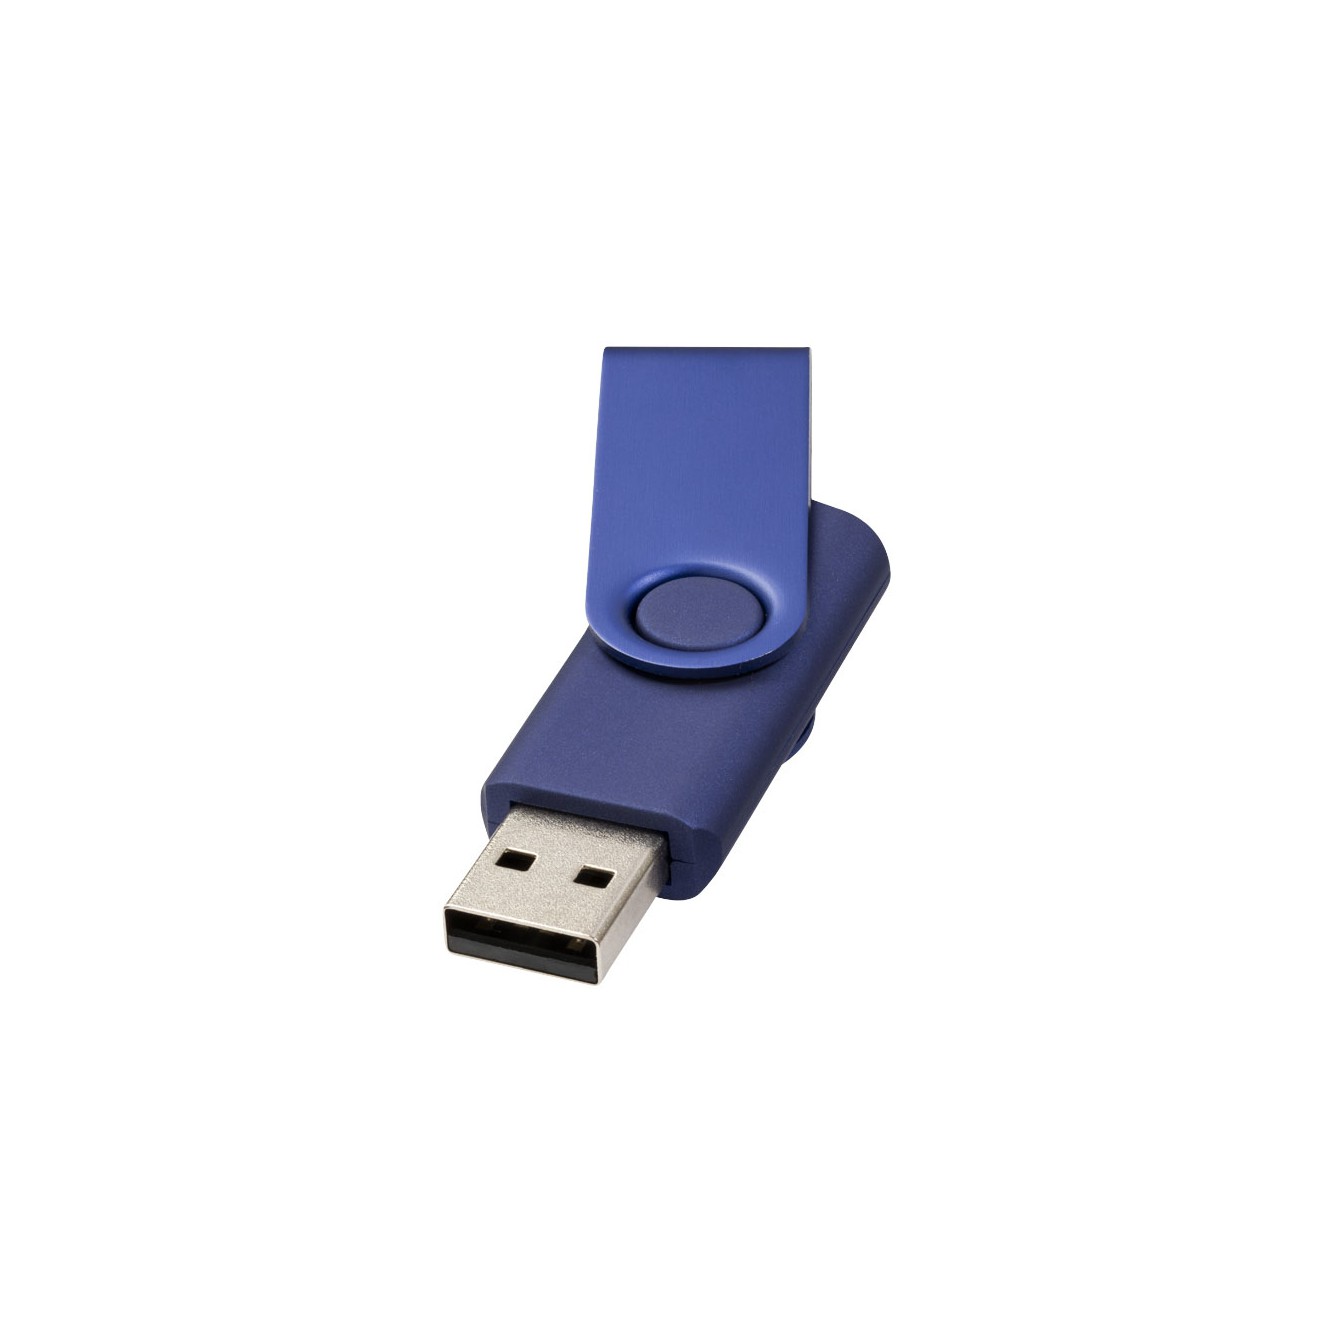 USB stick rotate metallic